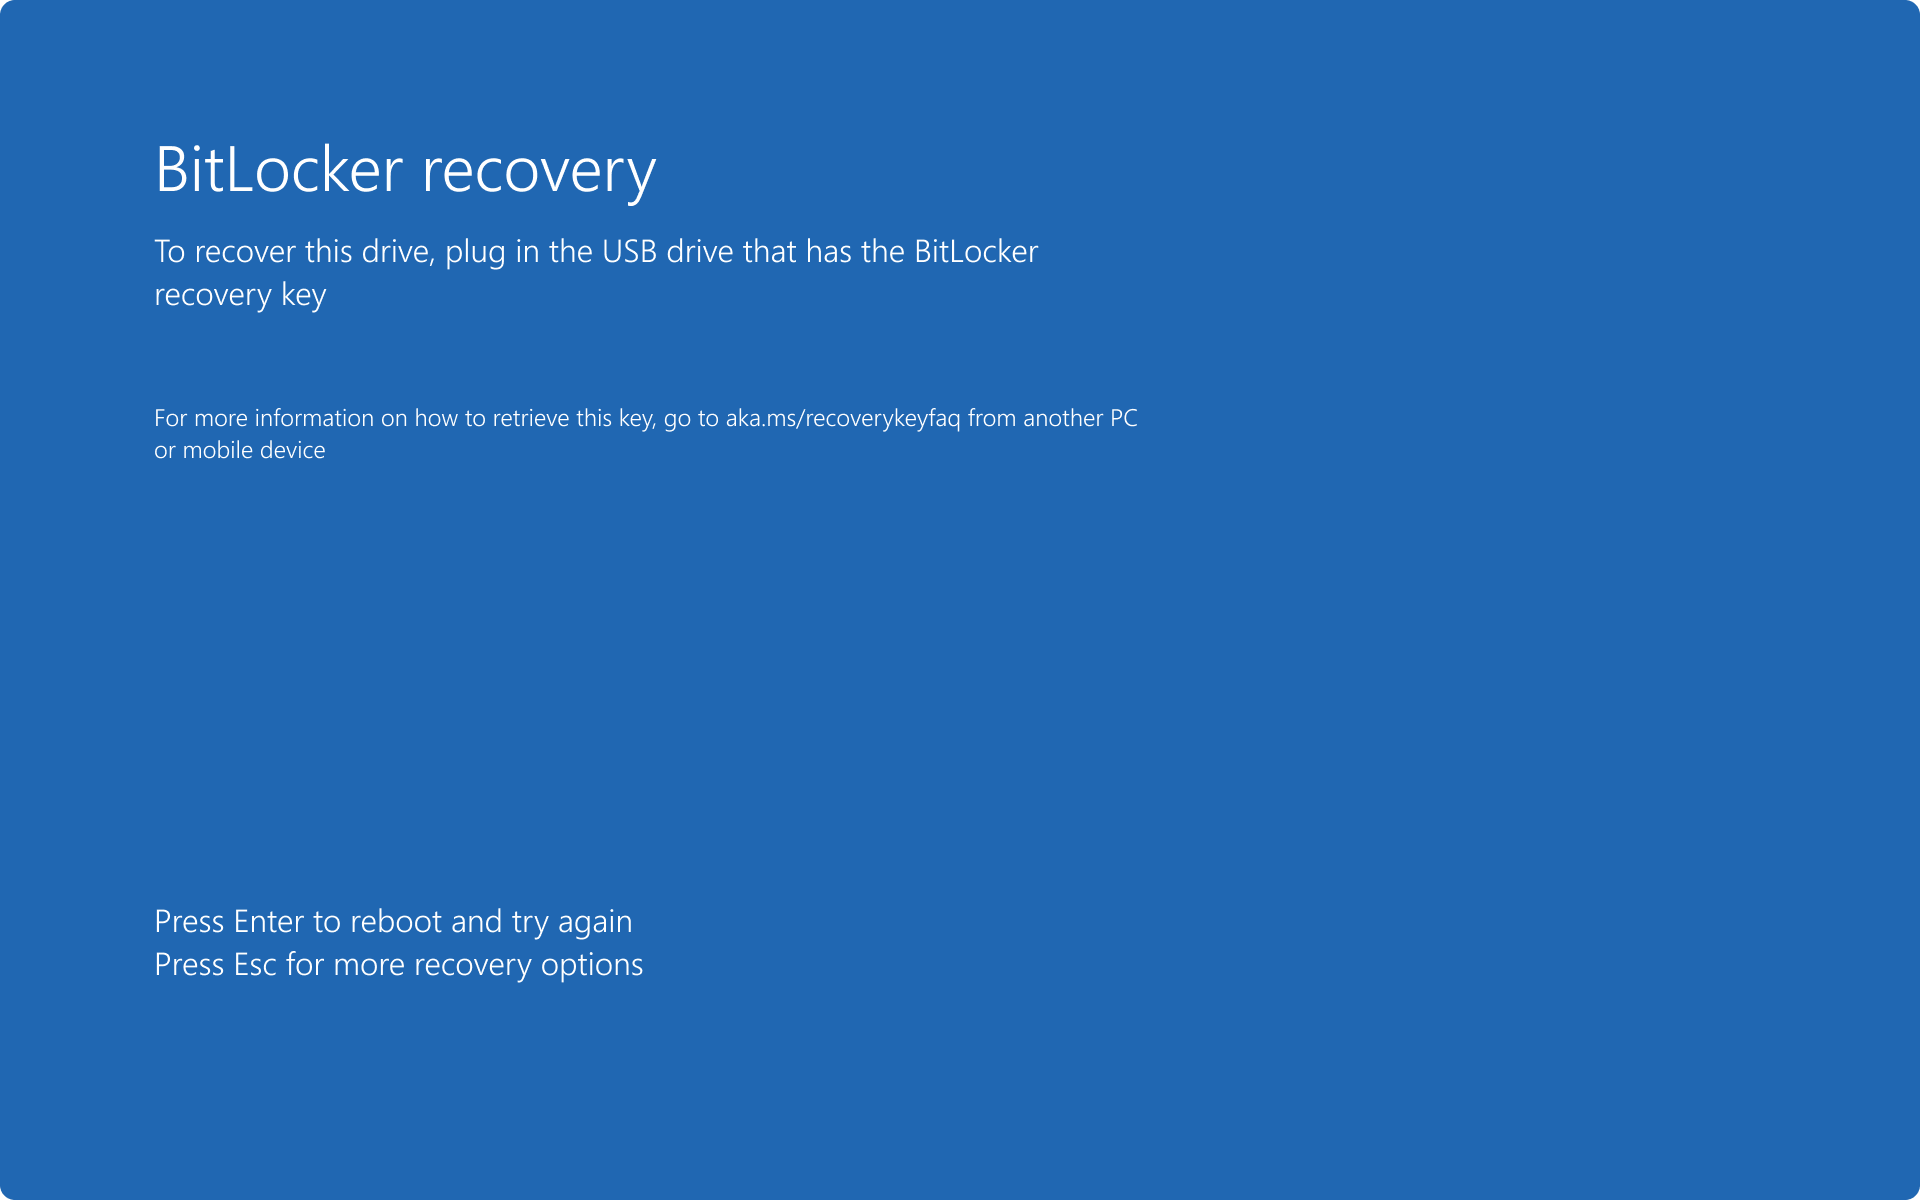 BitLocker recovery key prompt